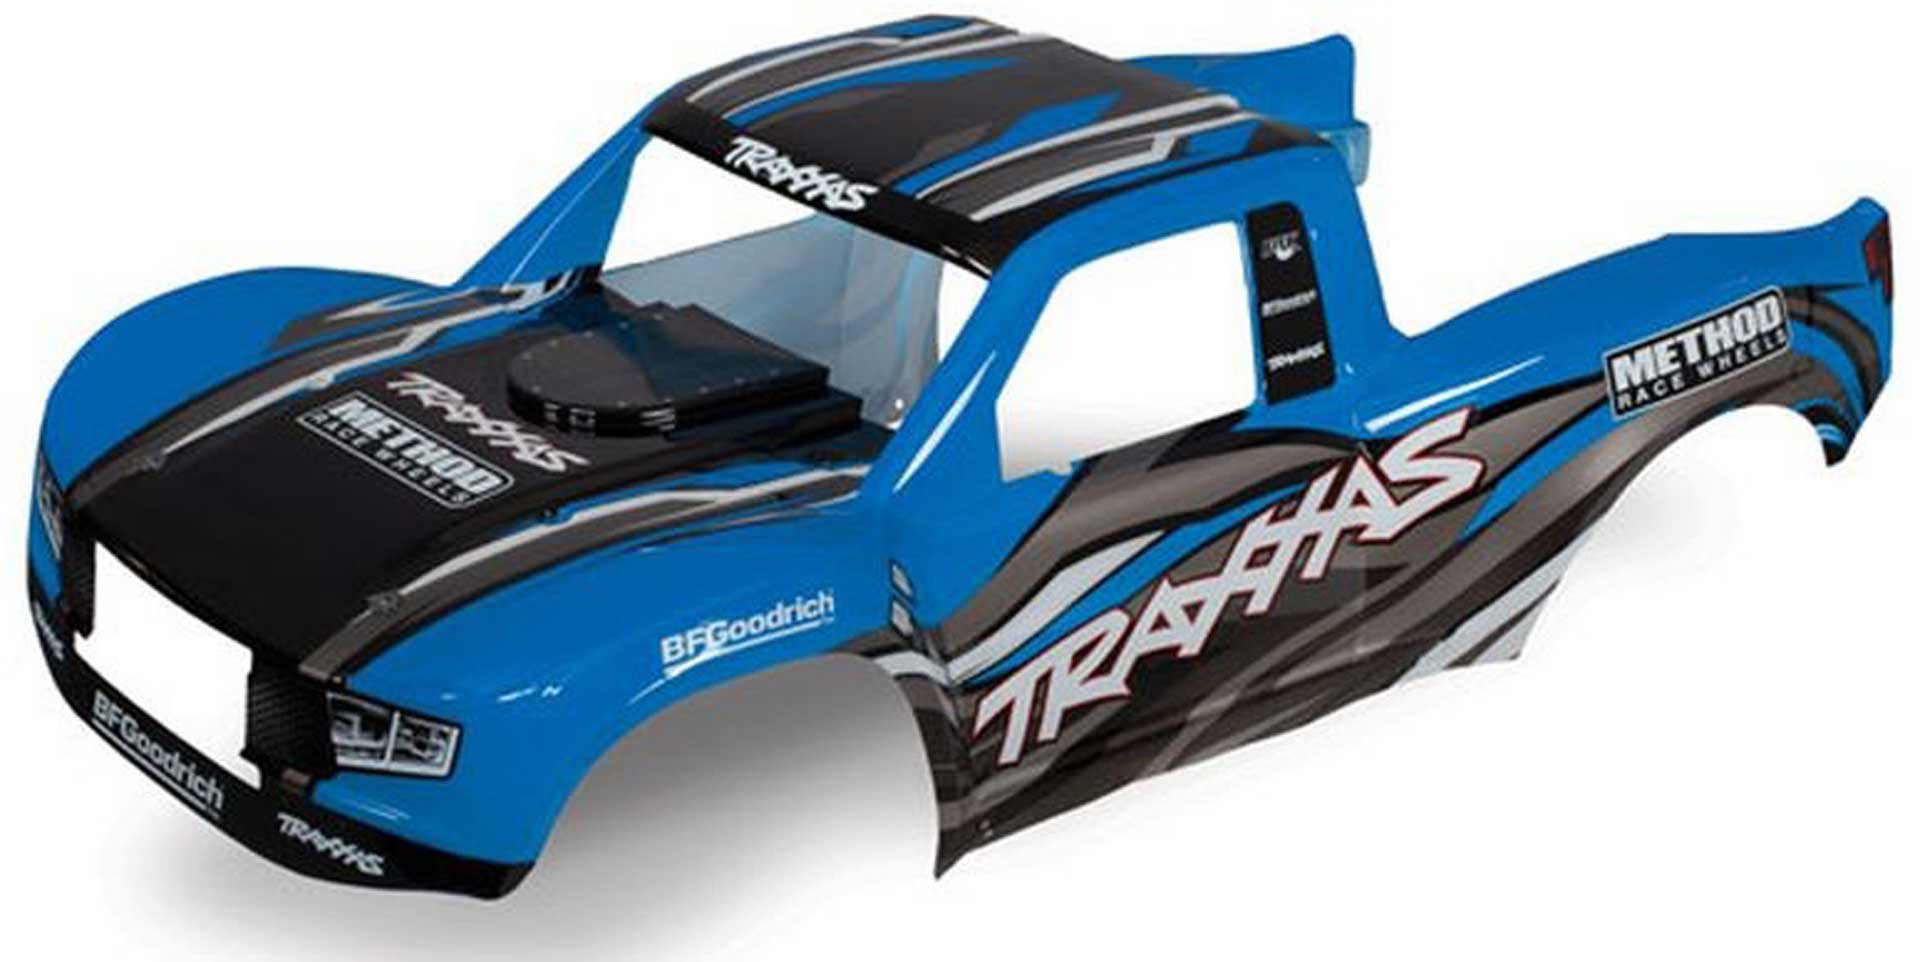 Body Desert Racer Traxxas Edition (painted+sticker)